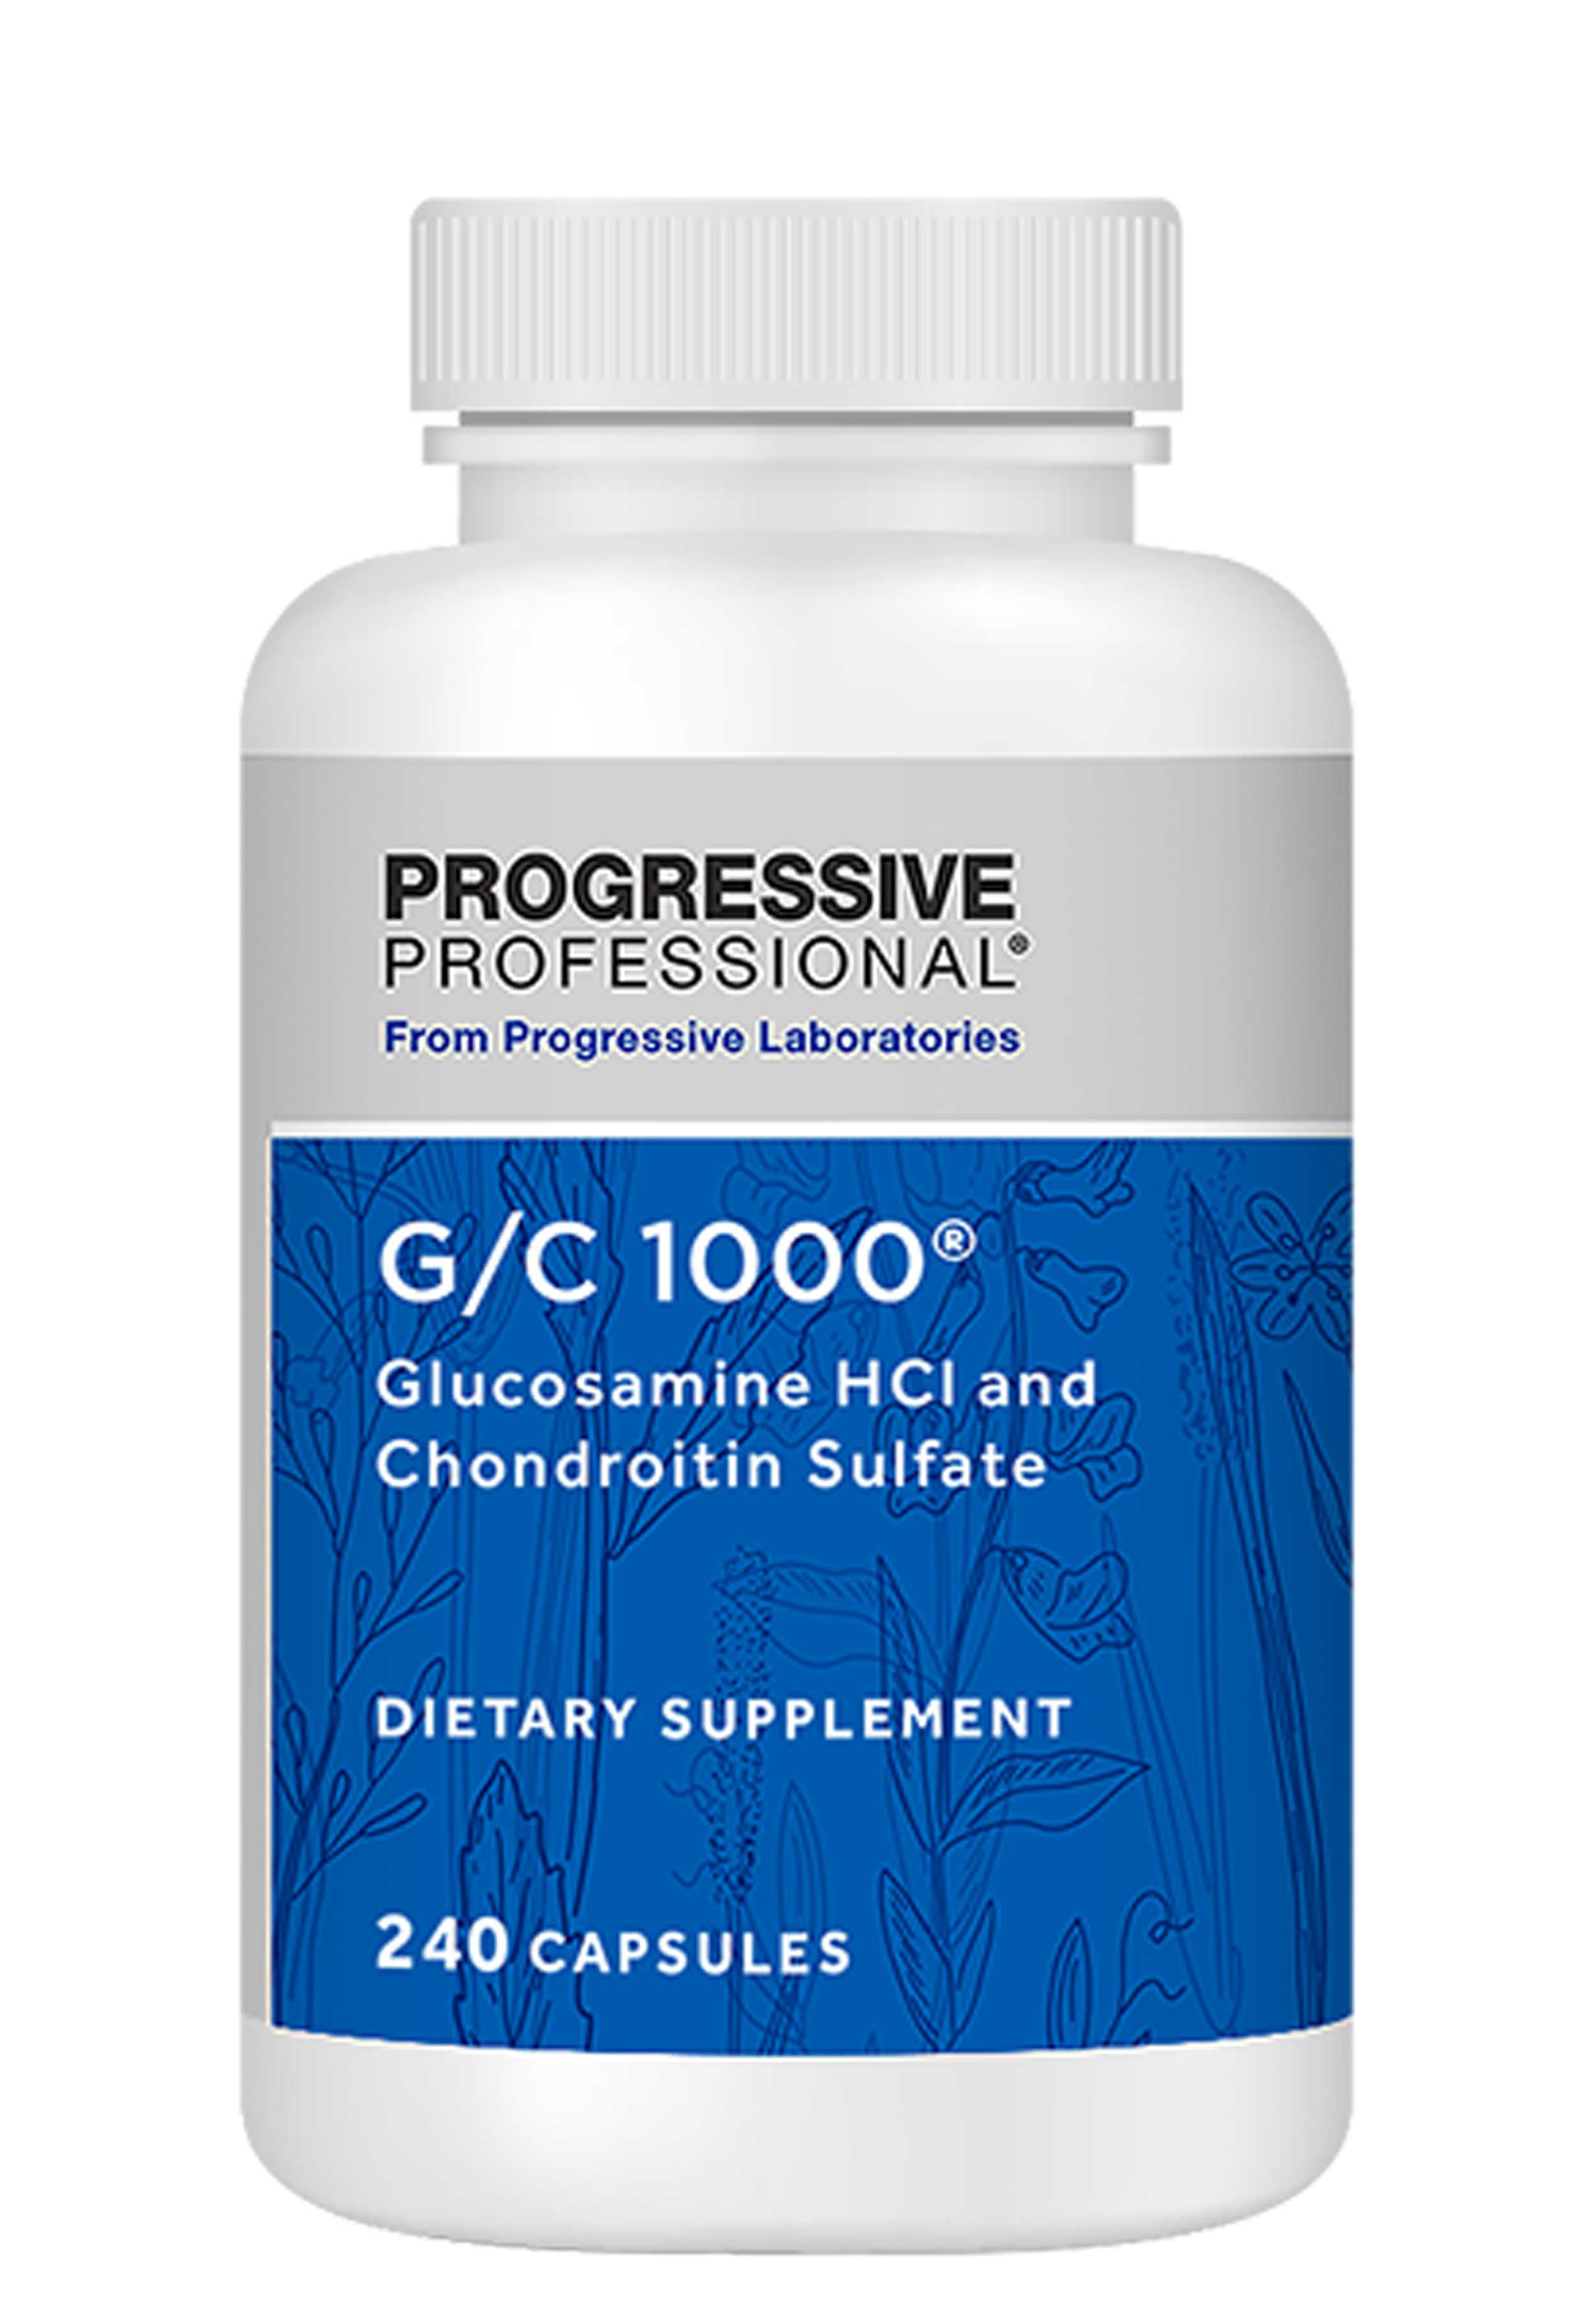 Progressive Laboratories G/C 1000